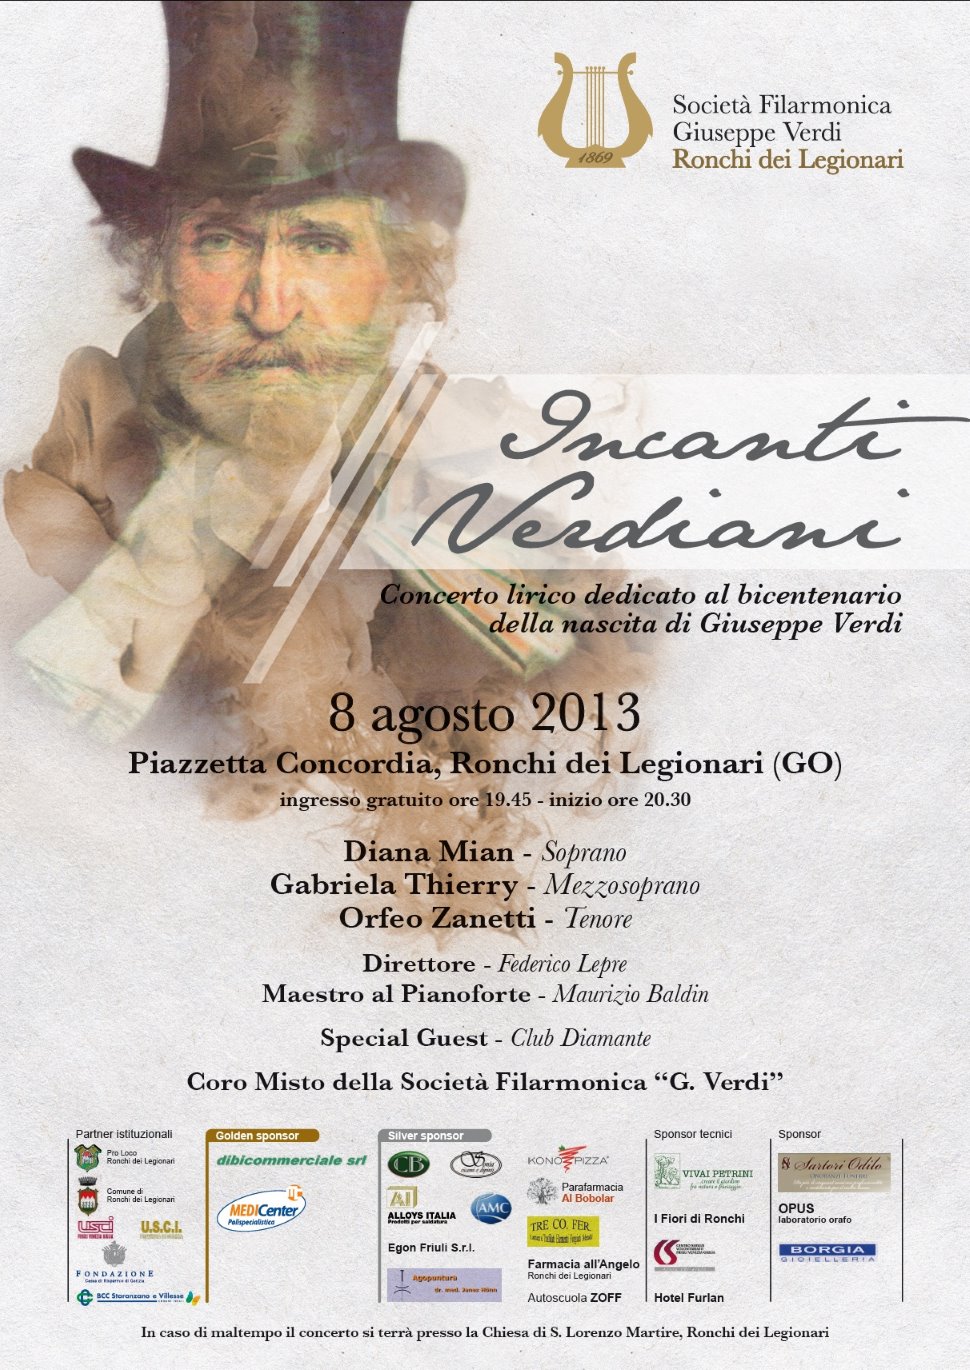 Concerto lirico "Incanti Verdiani" 8 agosto Ronchi dei Leg.(GO)